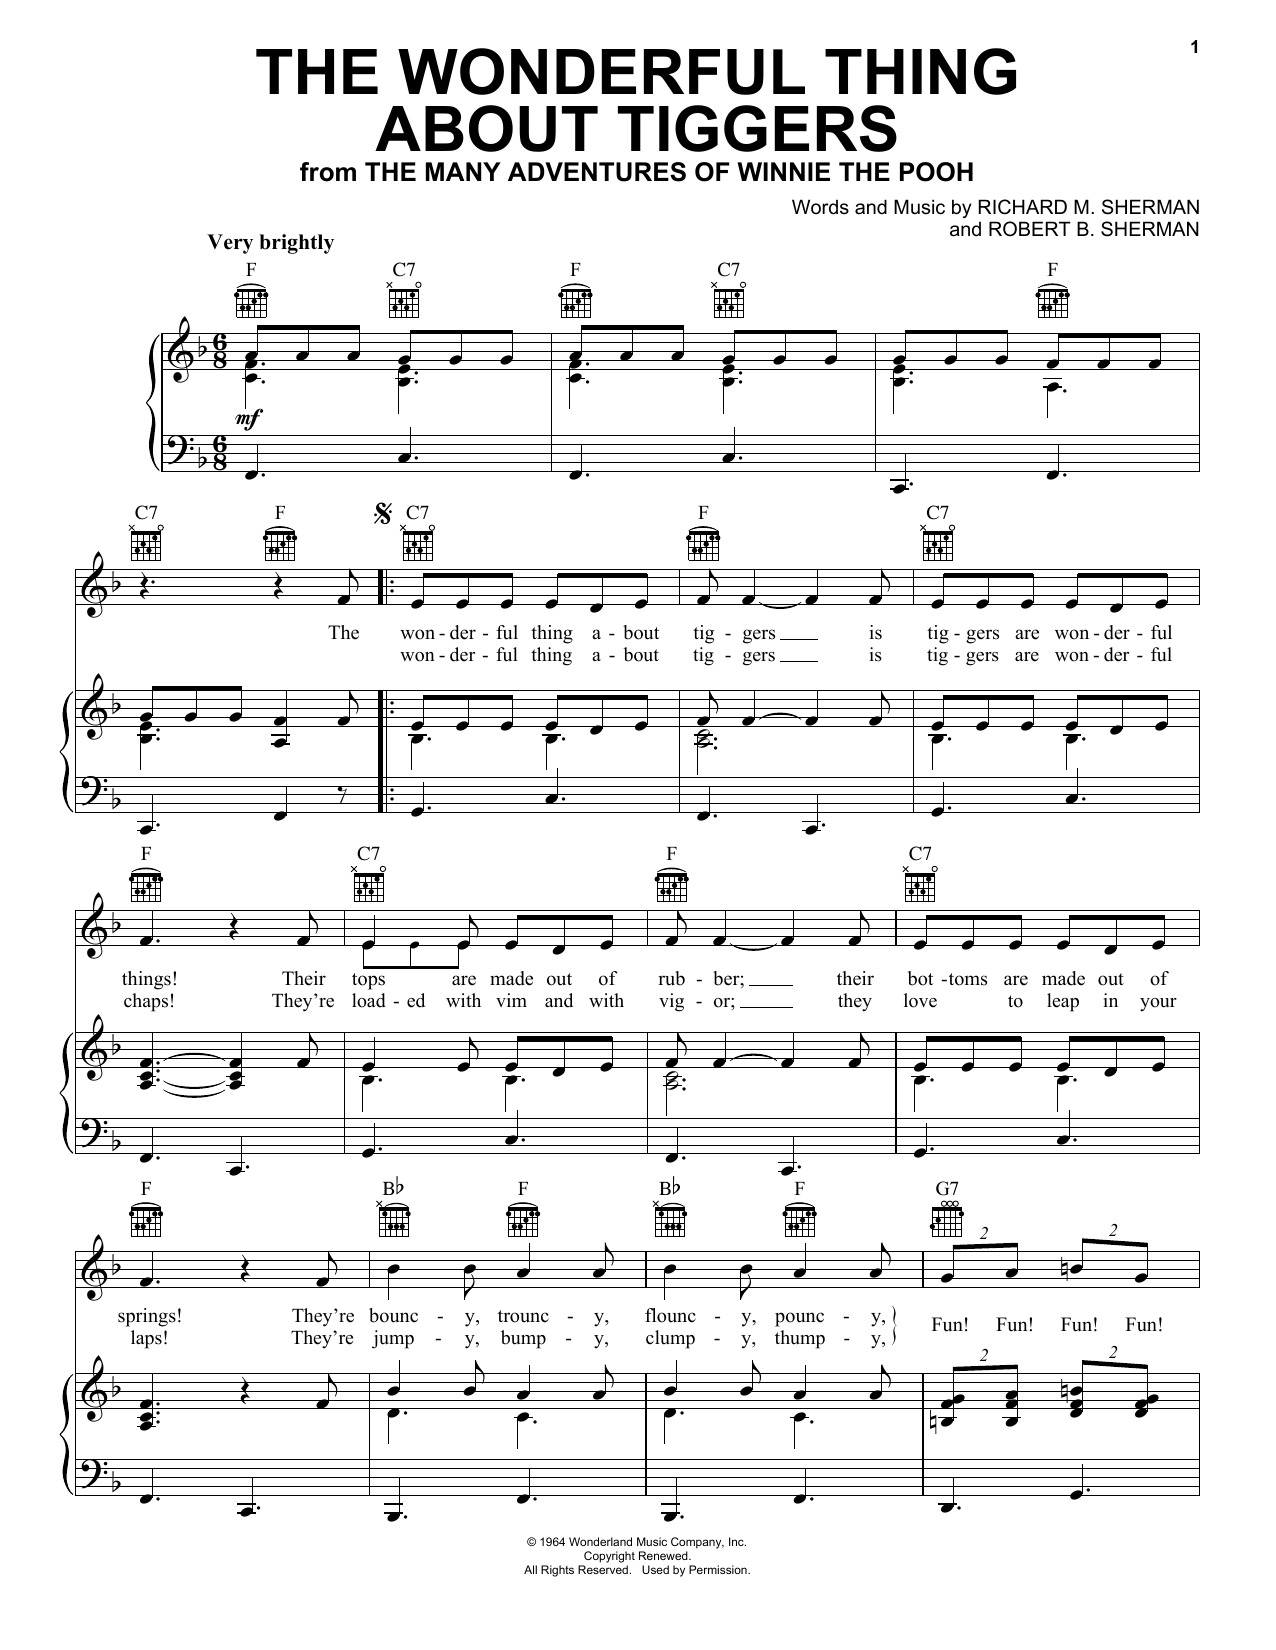 Richard & Robert Sherman The Wonderful Thing About Tiggers Sheet Music Notes & Chords for Viola - Download or Print PDF